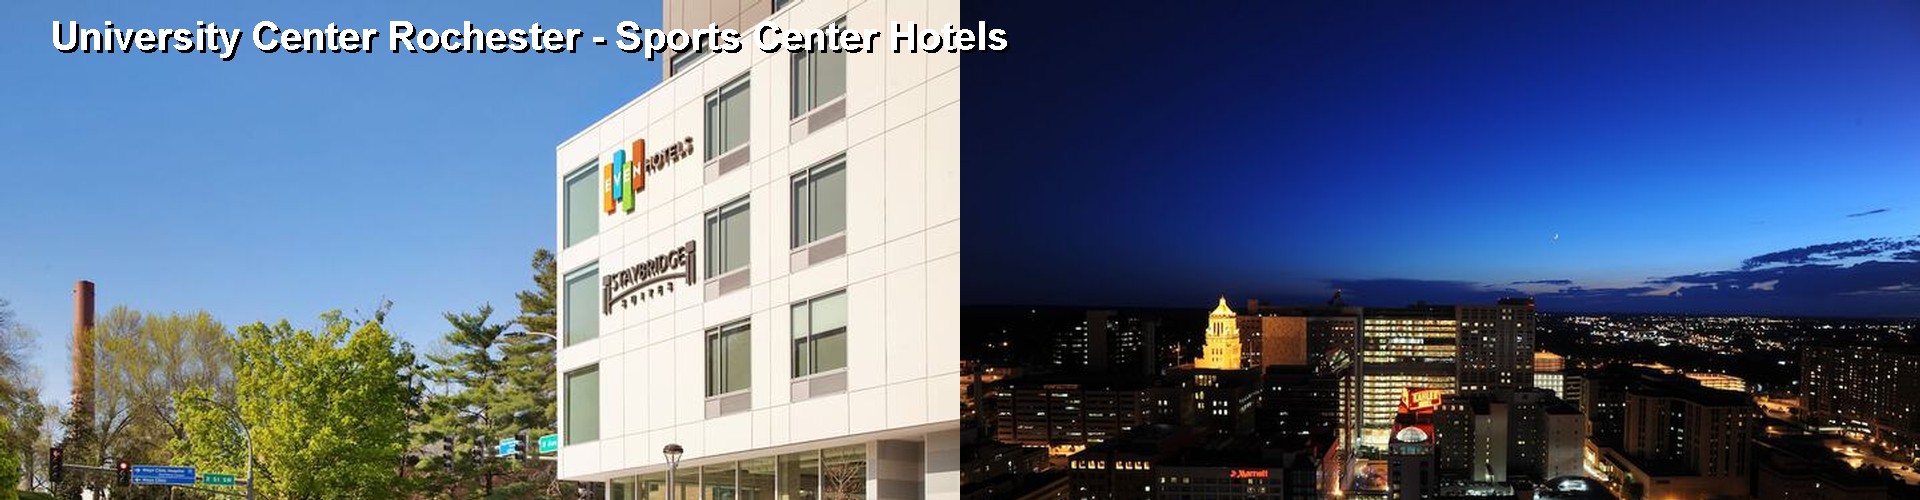 5 Best Hotels near University Center Rochester - Sports Center